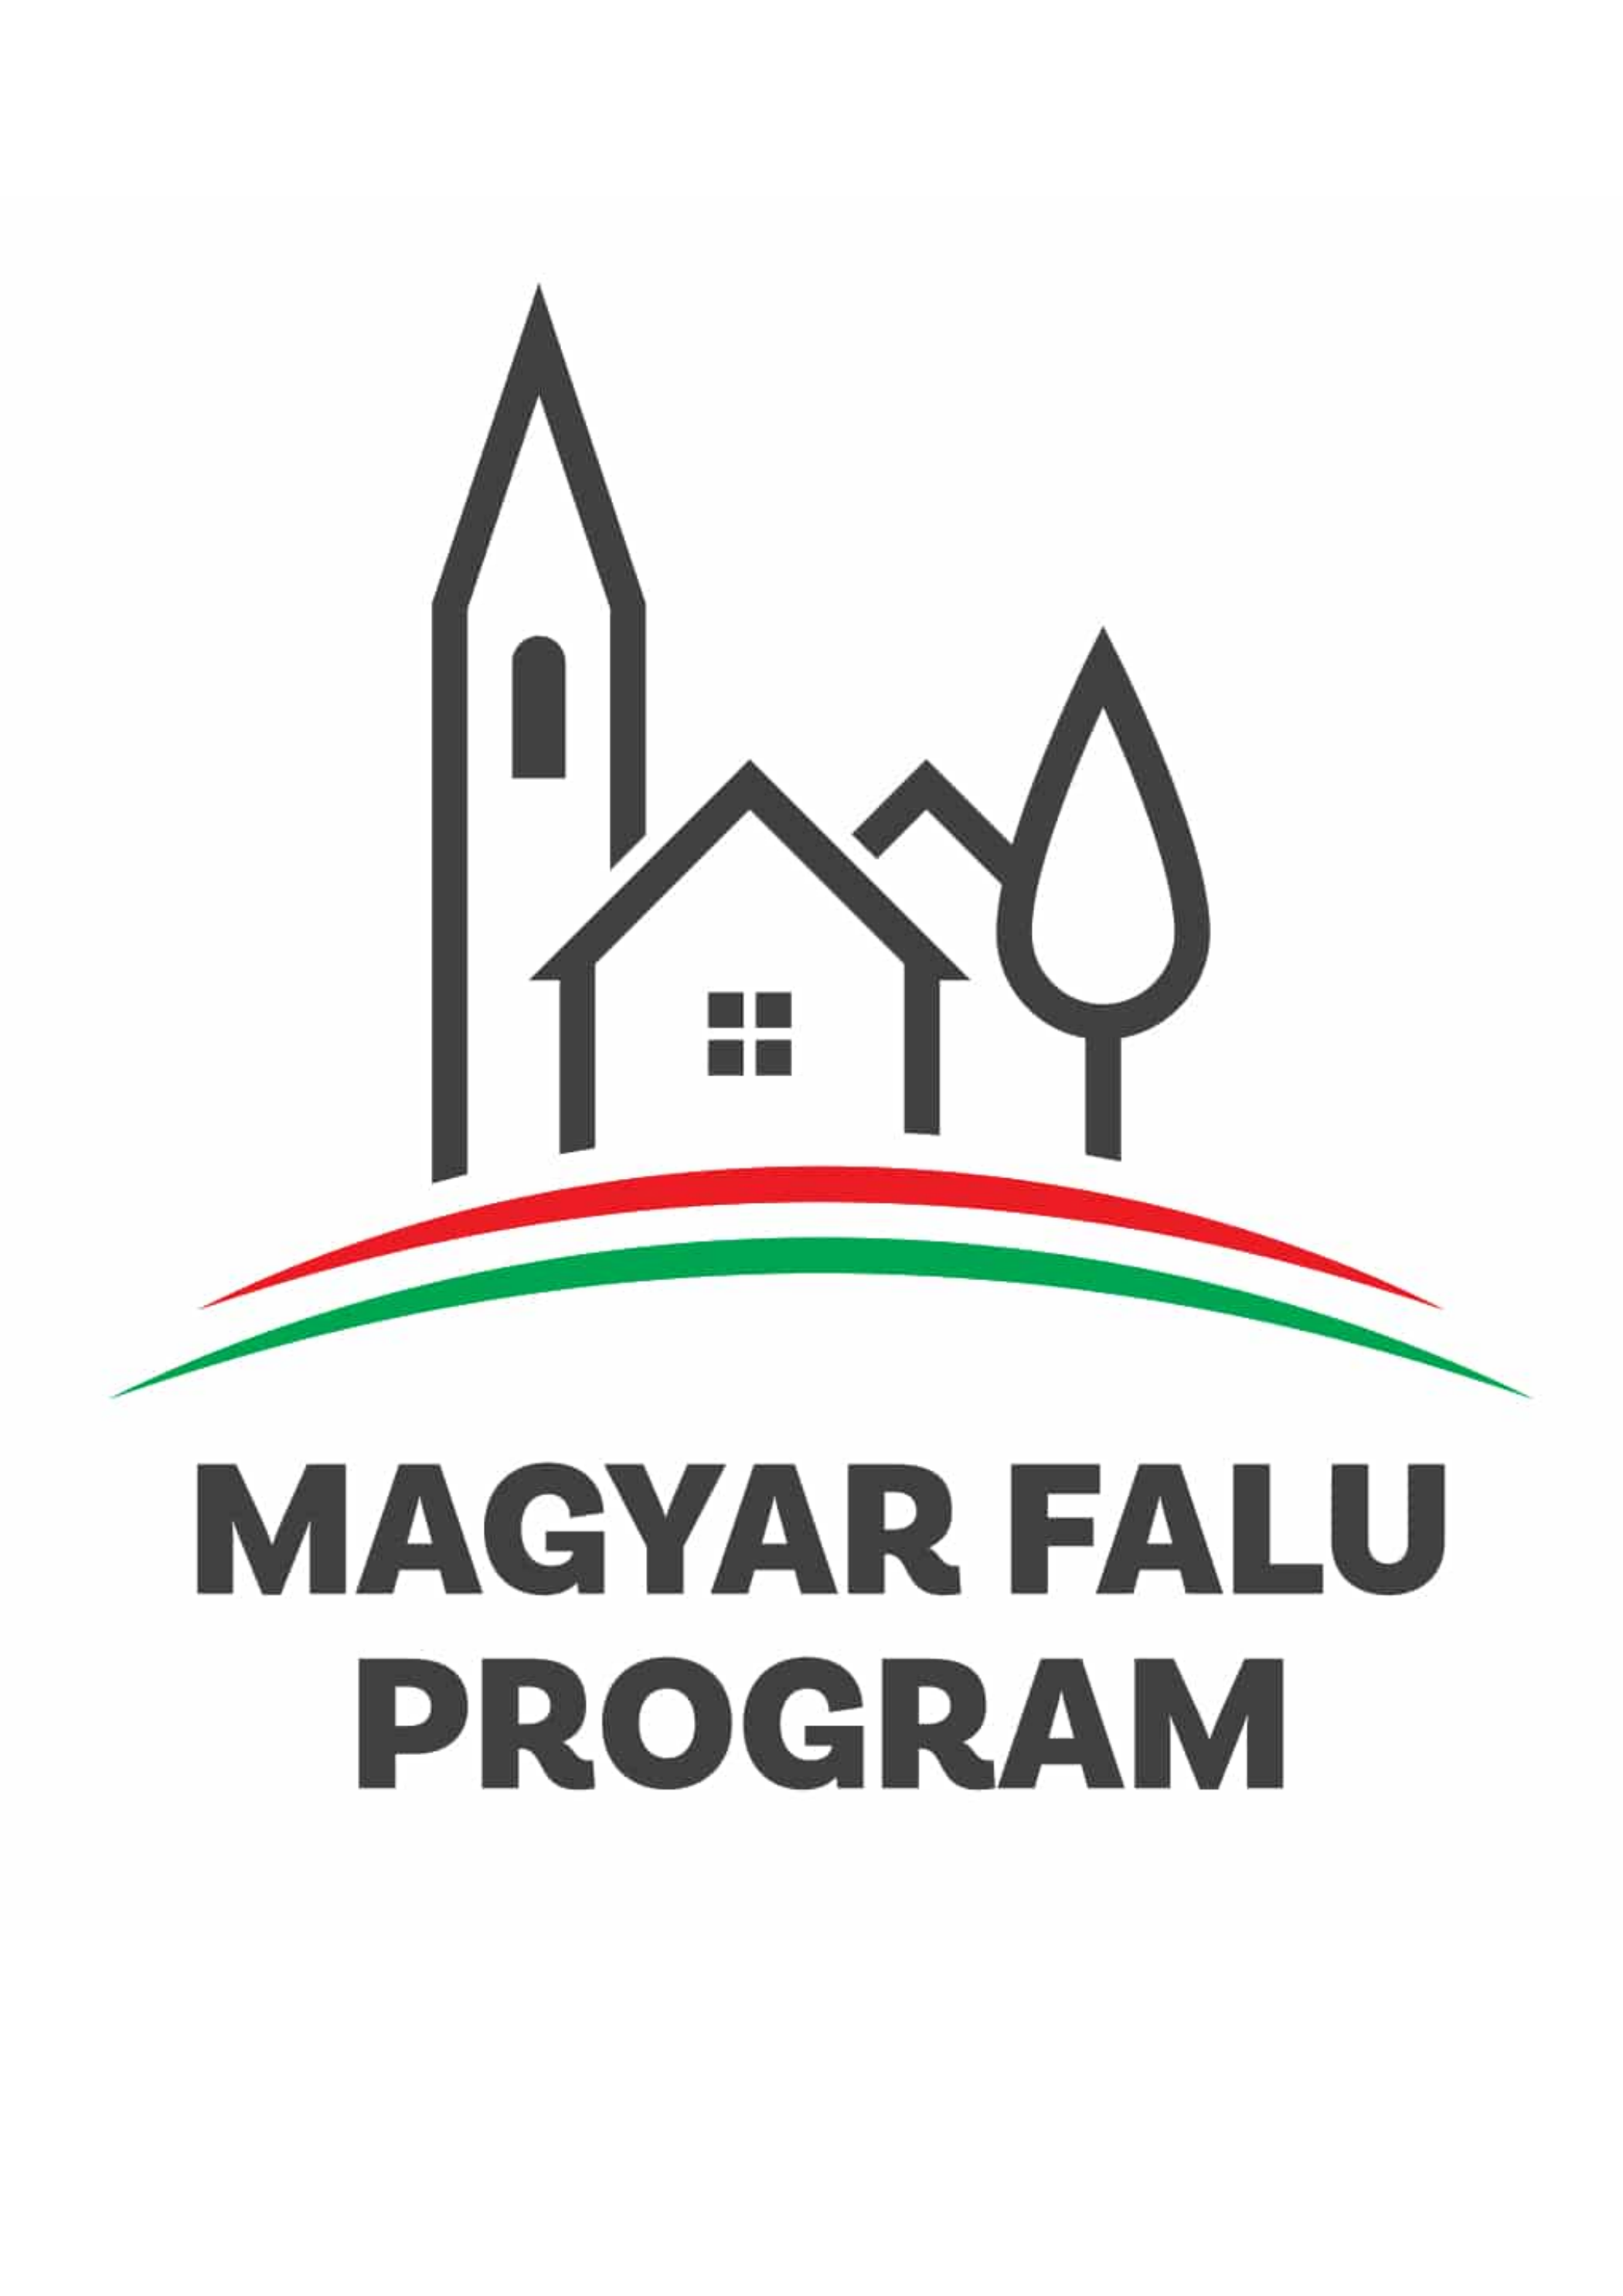 mfp logo